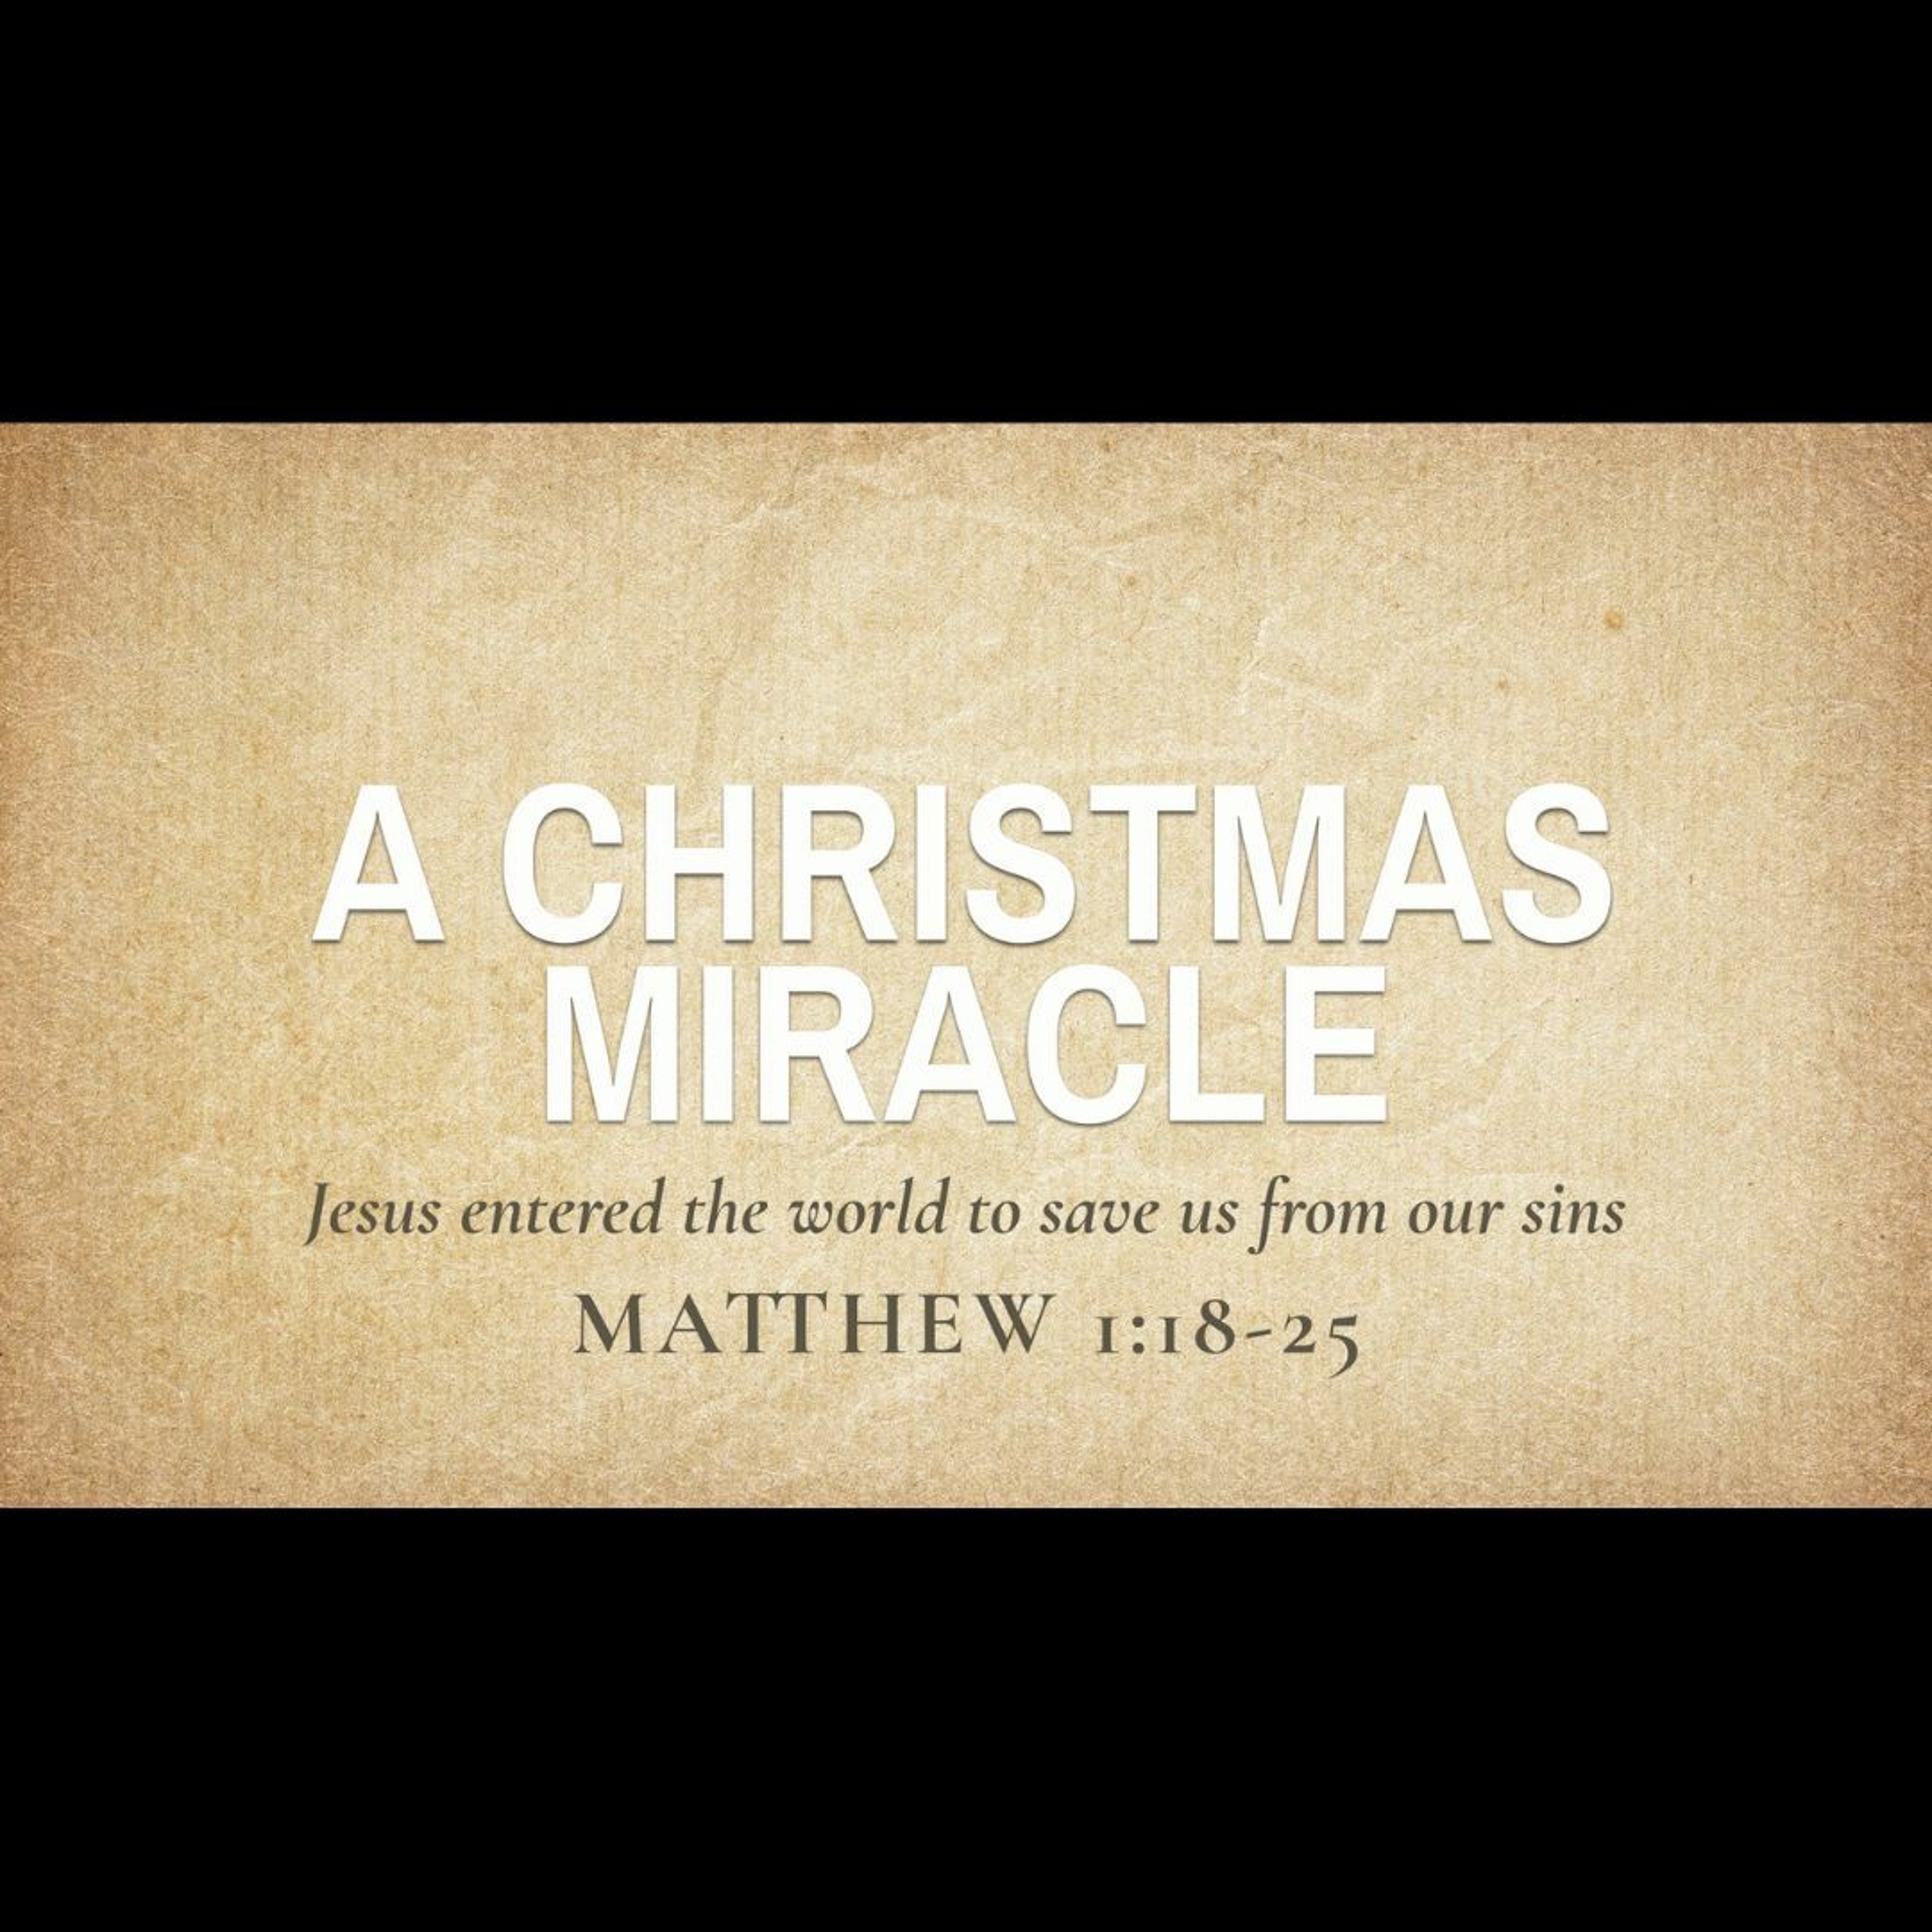 A Christmas Miracle (Matthew 1:18-25)